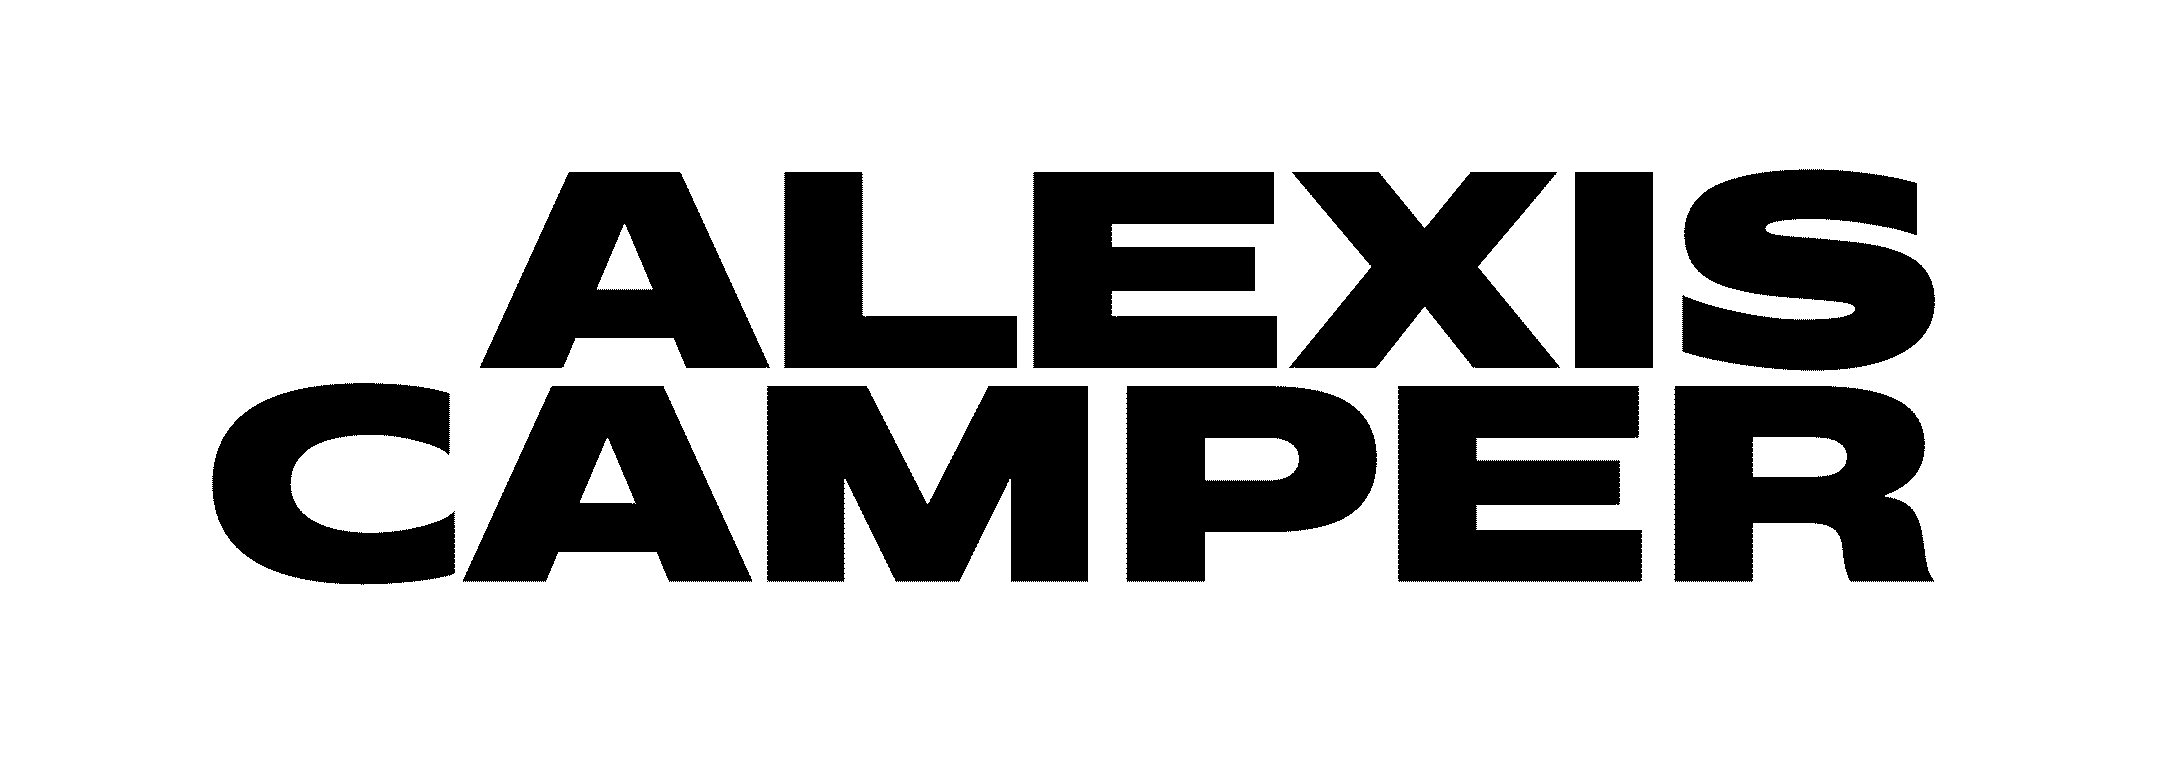 Alexis Camper